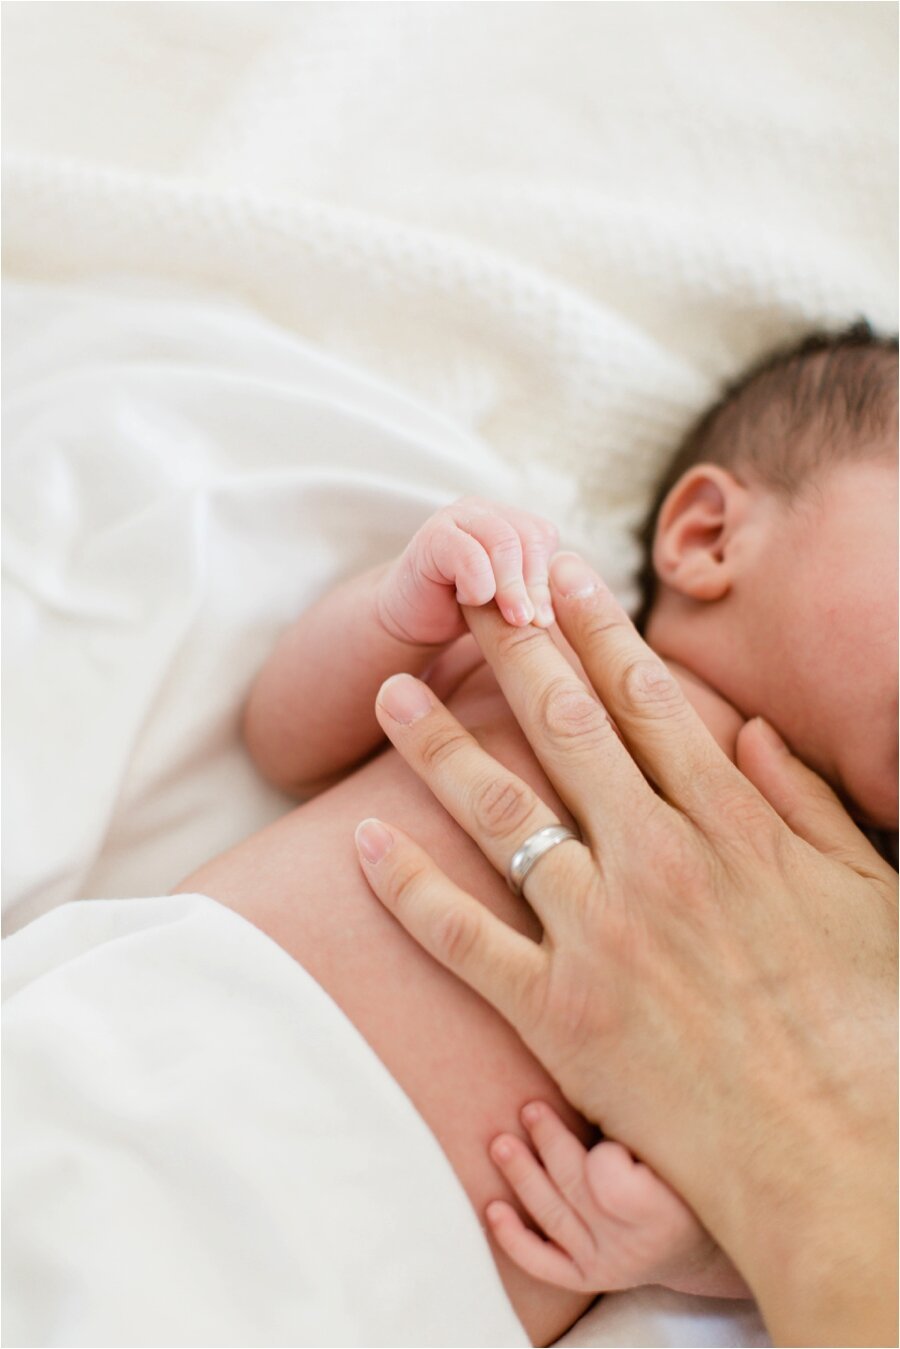 newborn baby grasps father's fingers